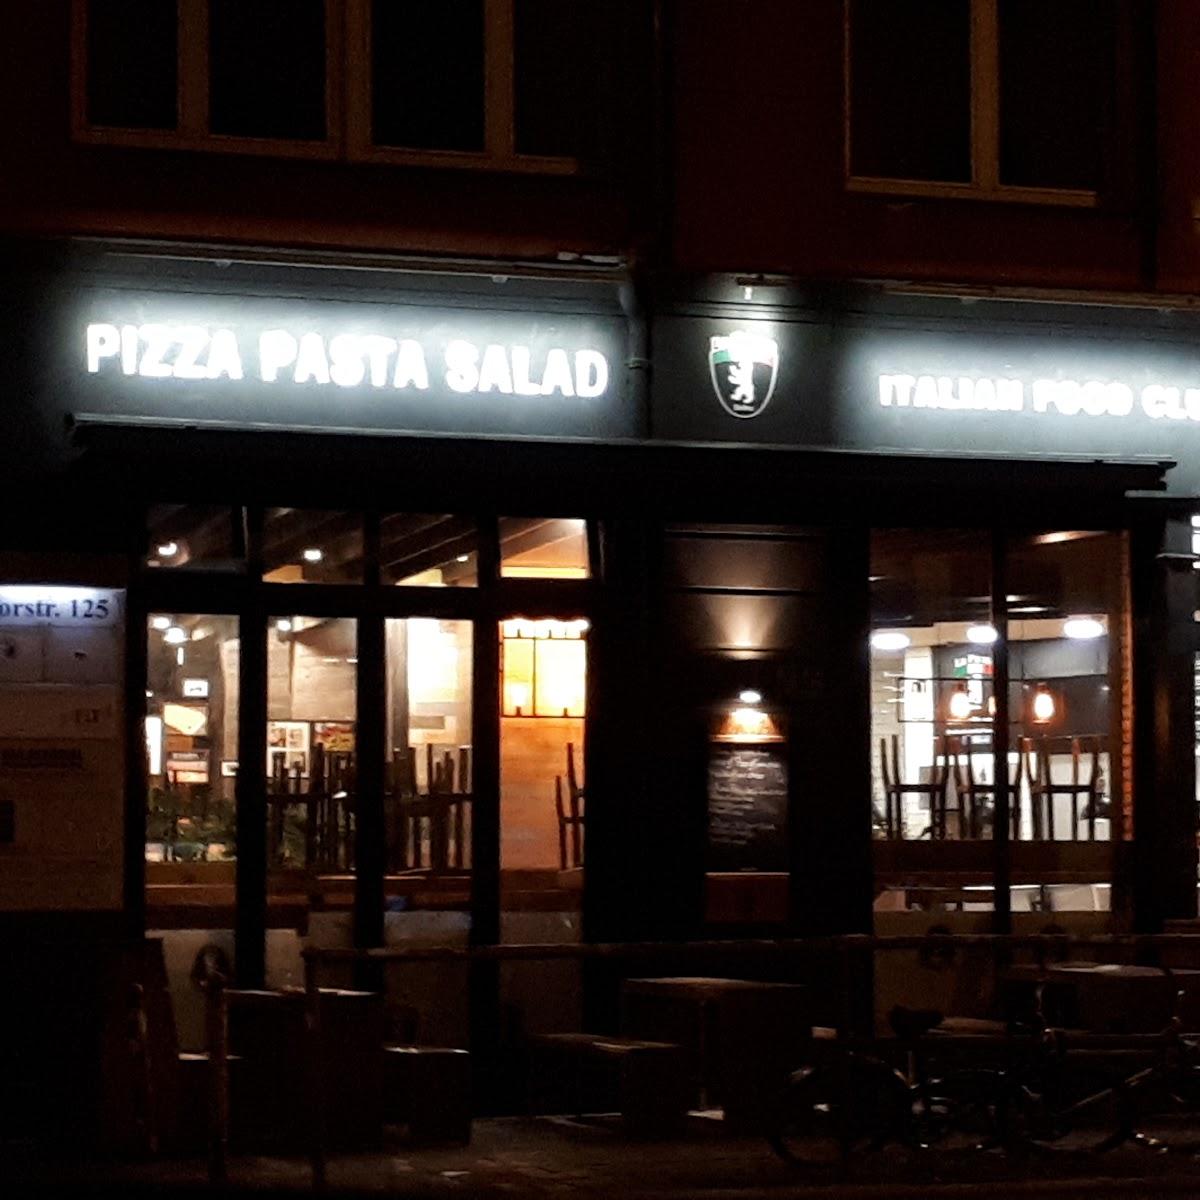 Restaurant "La Pausa" in Berlin